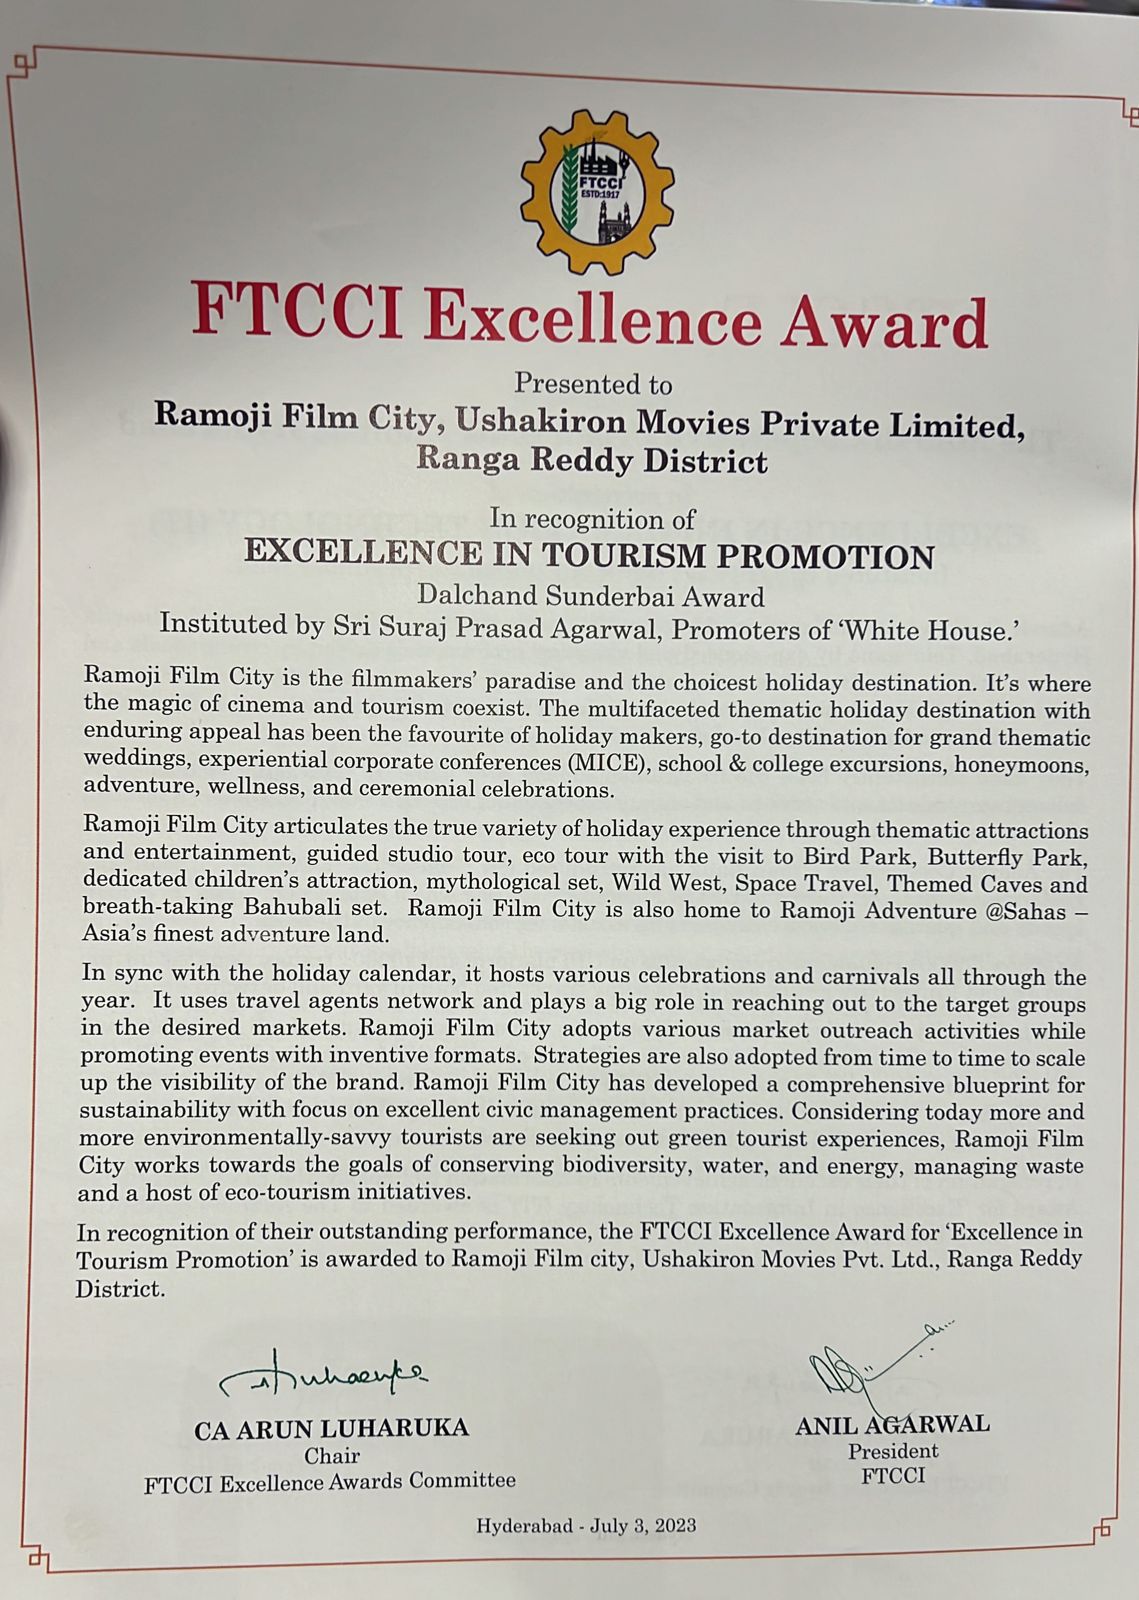 FTCCI Award Certificate